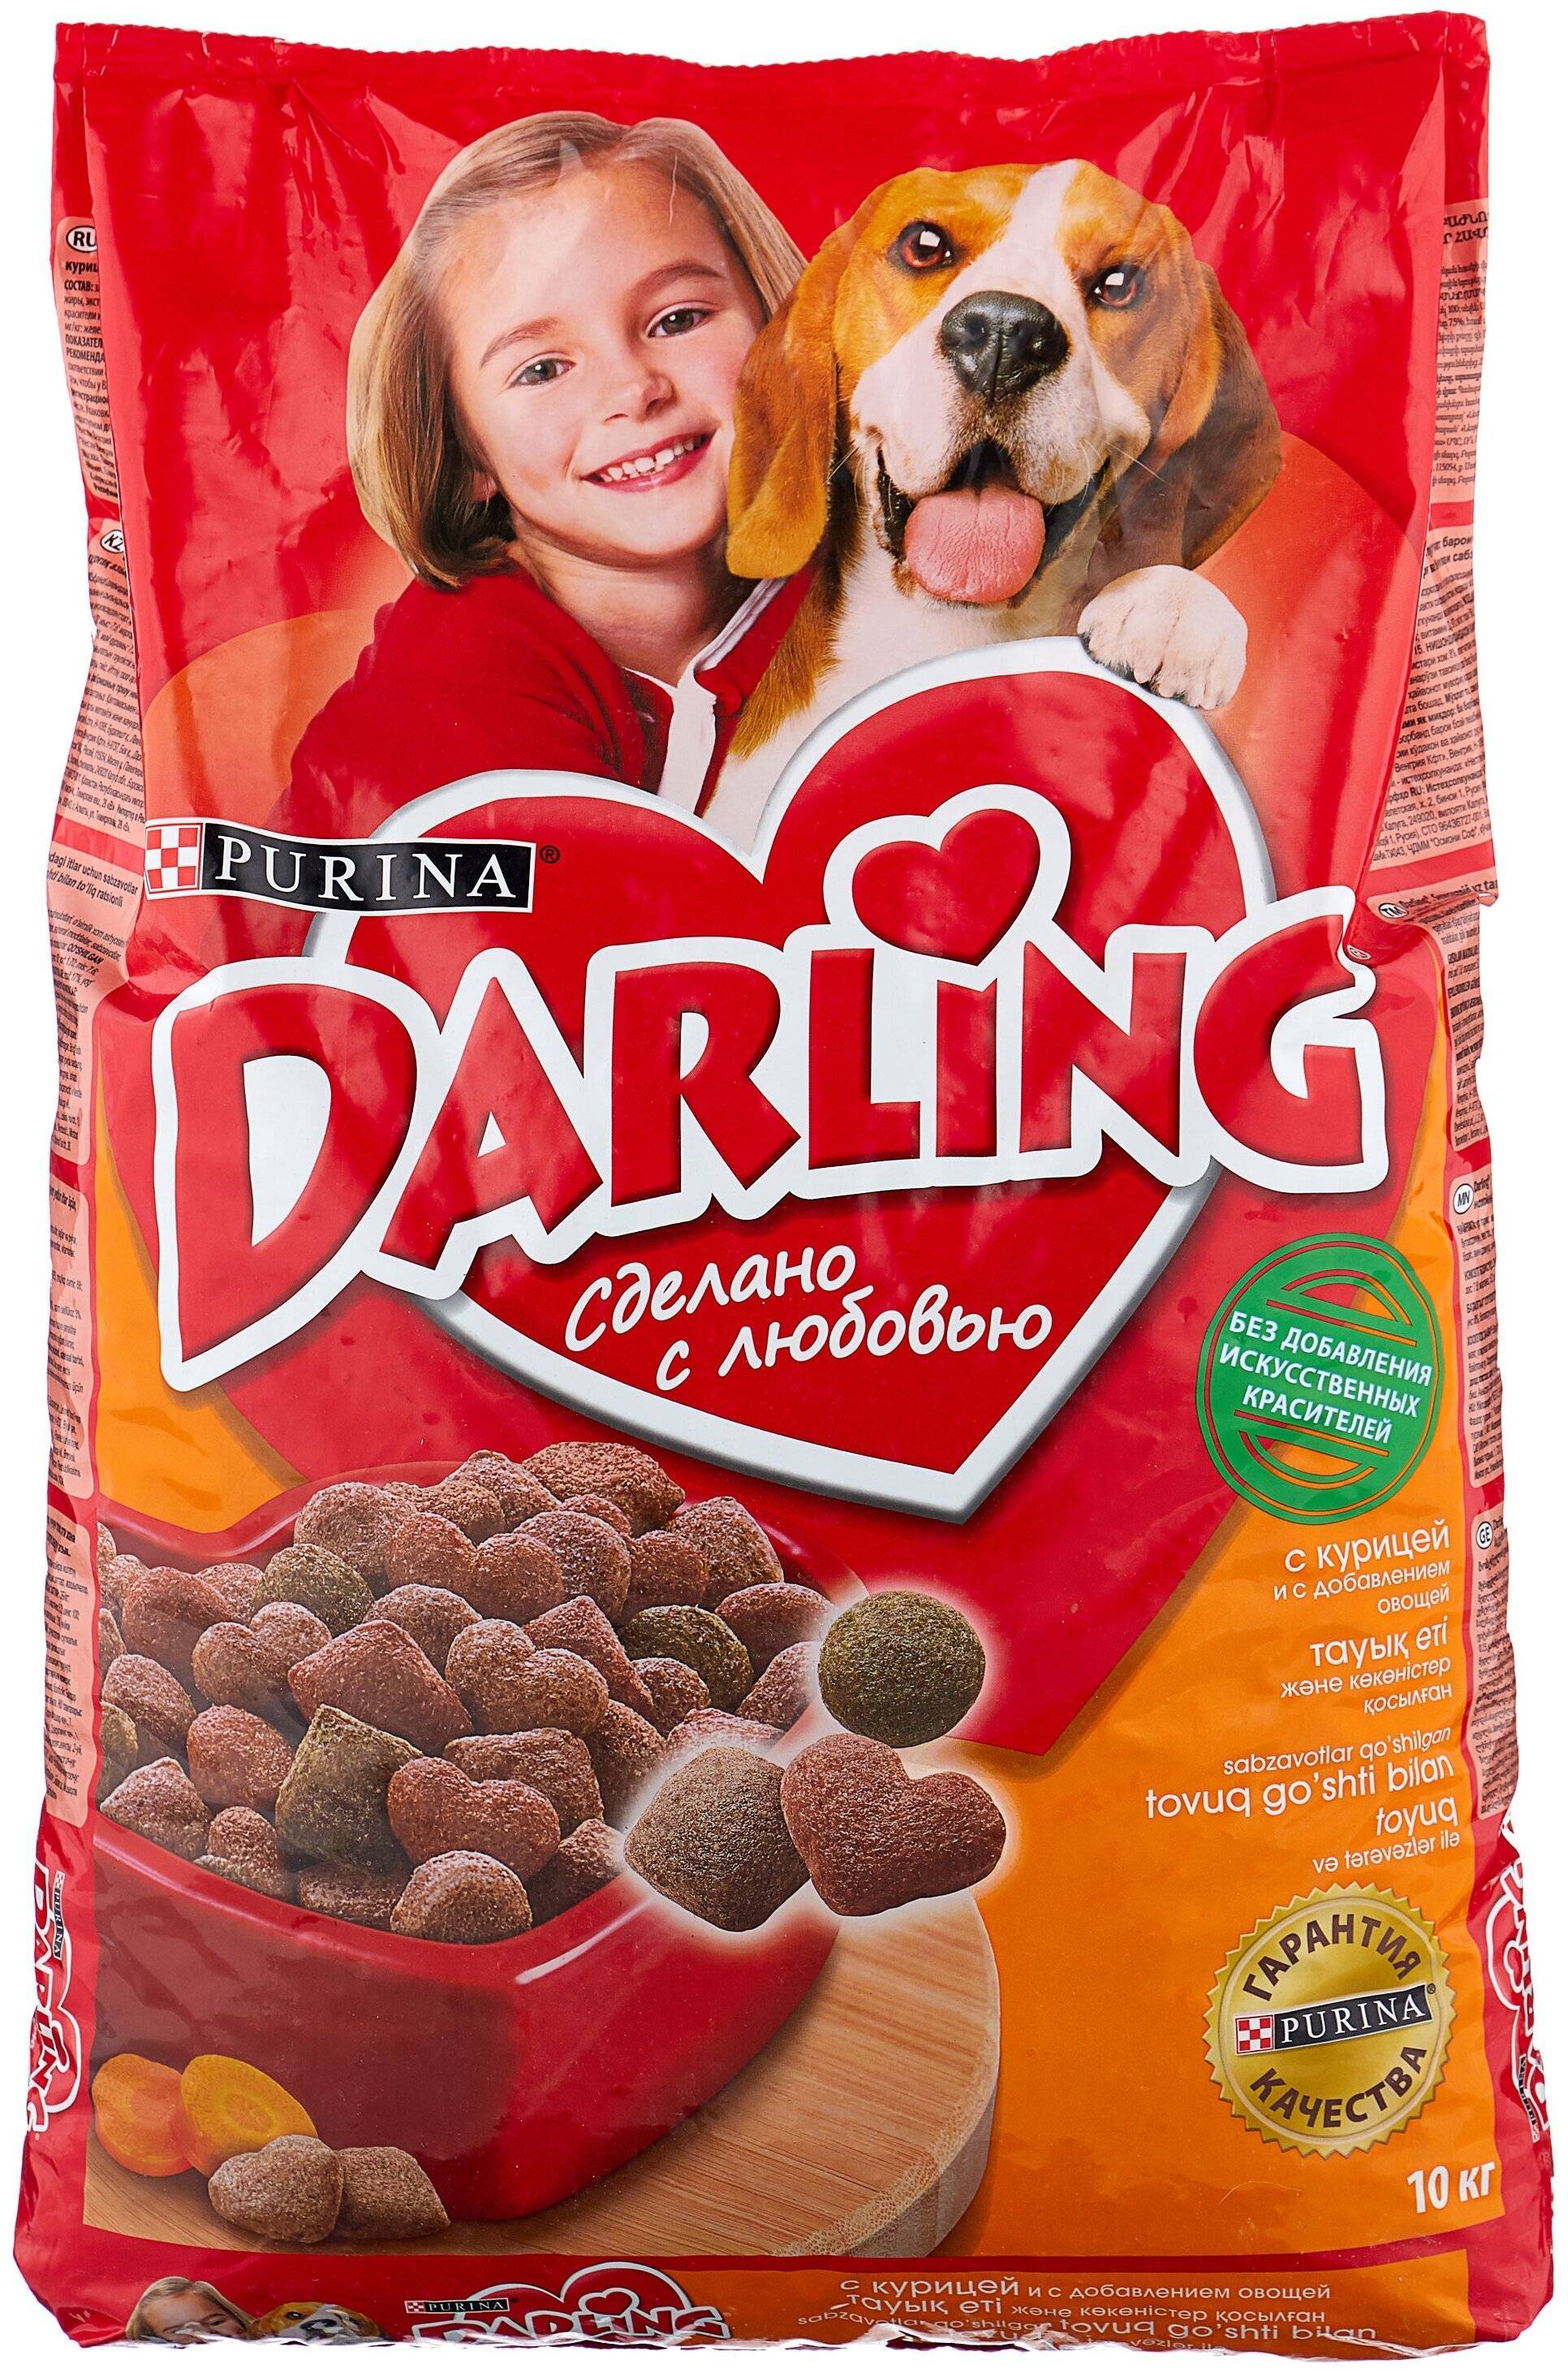 Корма для собак darling (дарлинг) | ваши питомцы